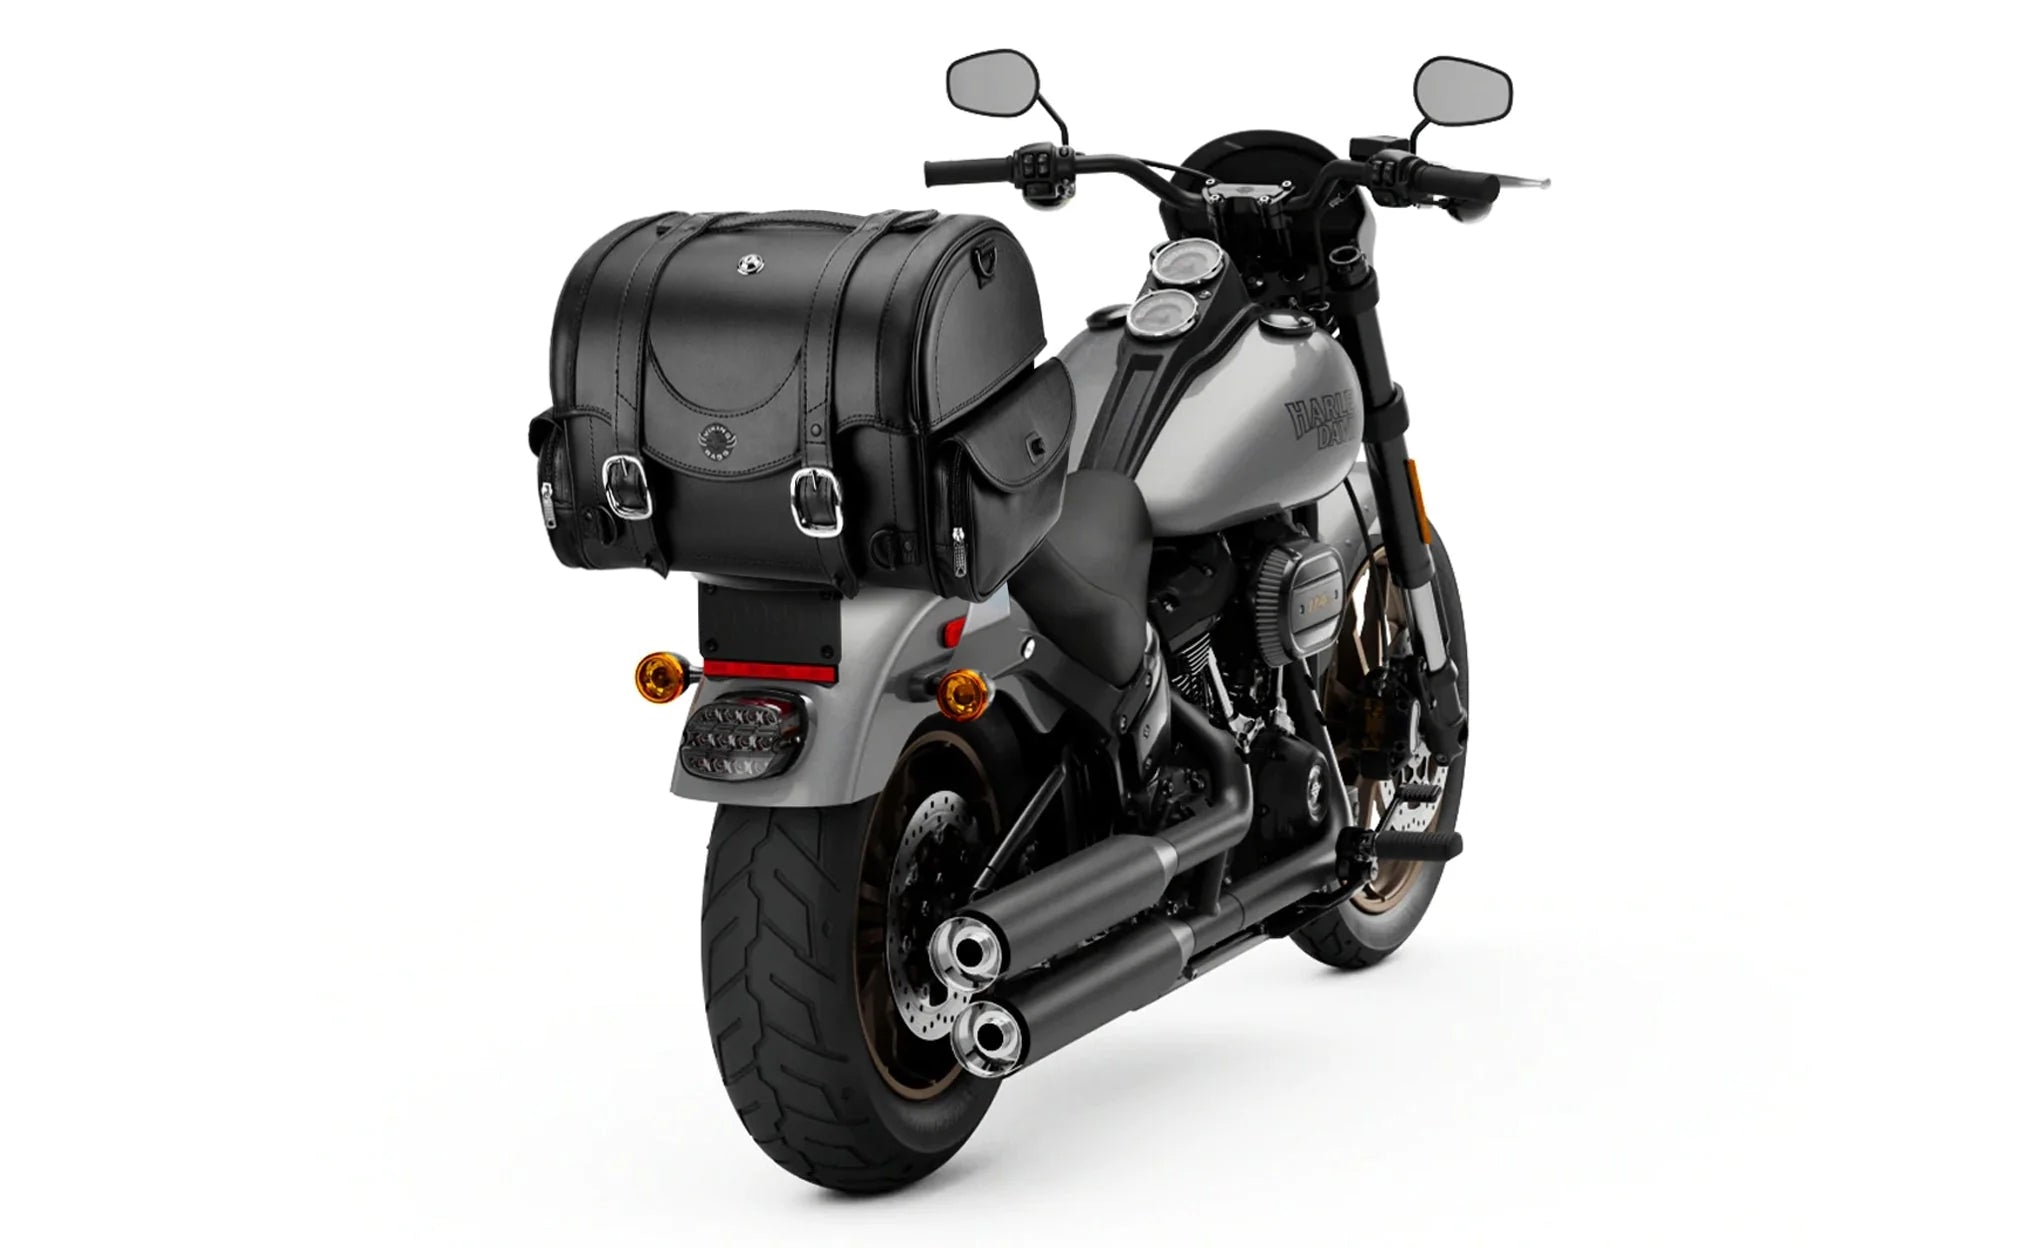 21L - Century Medium Hysoung Leather Motorcycle Sissy Bar Bag on Bike Photo @expand